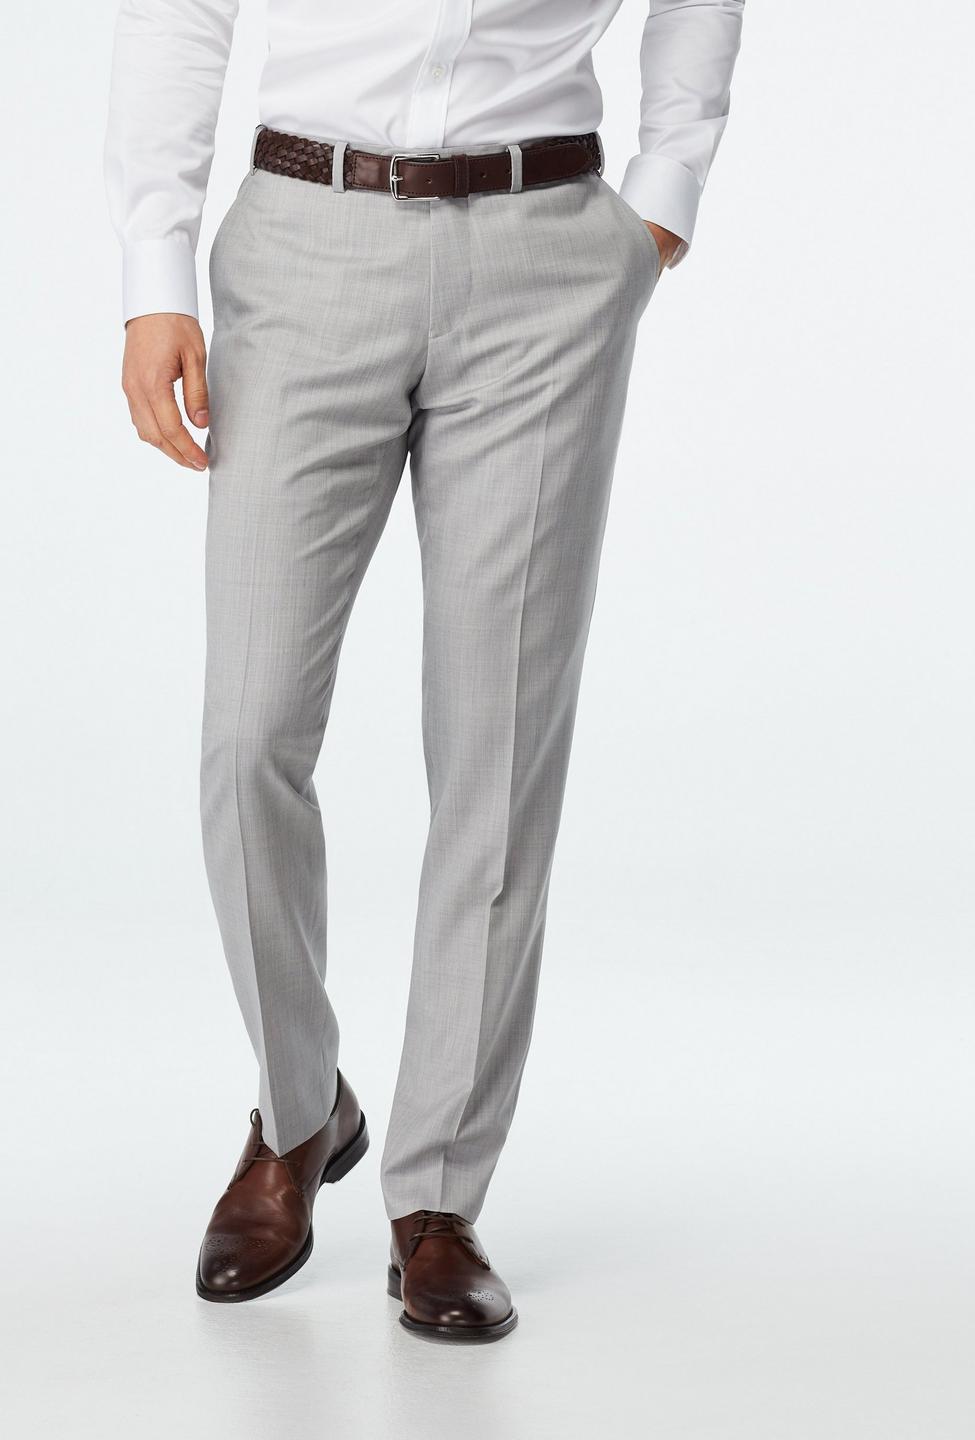 Hemsworth Silver Gray Pants